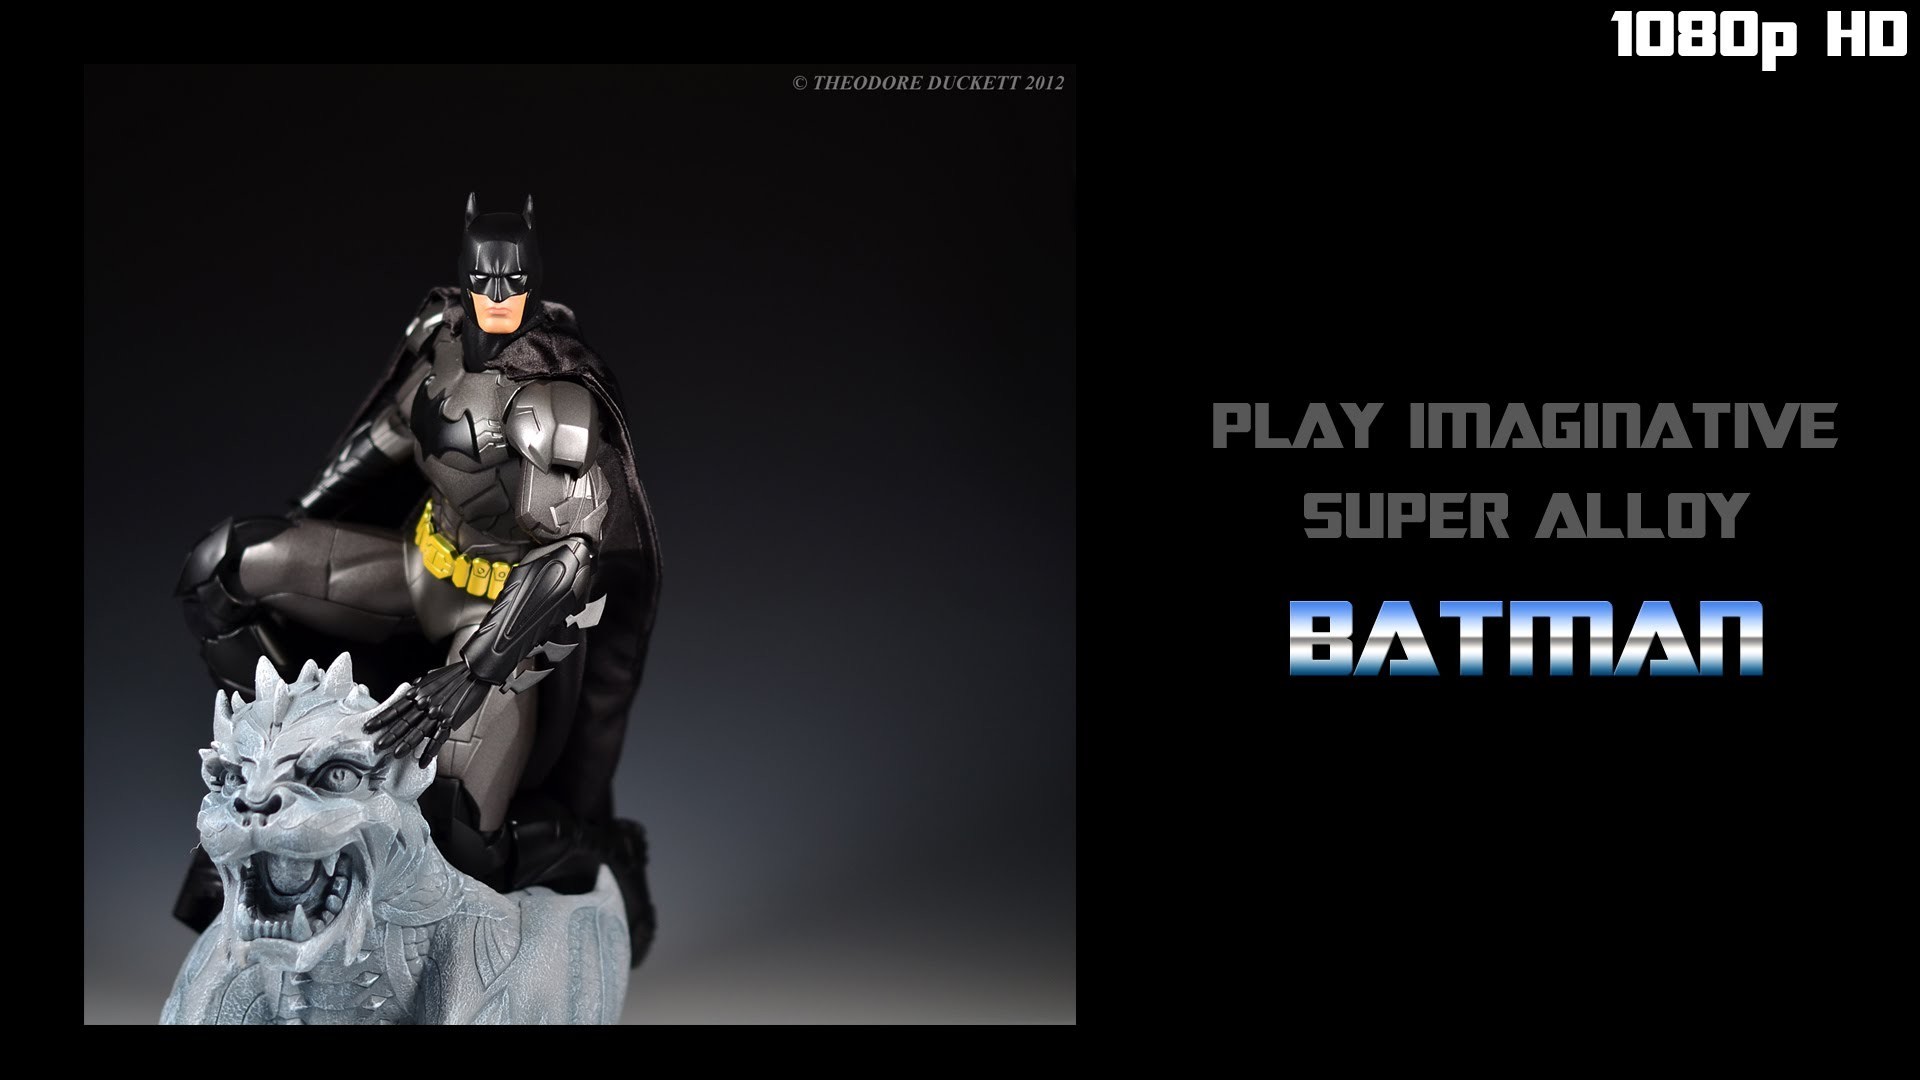 1920x1080 Toy Review: Play Imaginative 1/6th Super Alloy Batman (Jim Lee Edition)